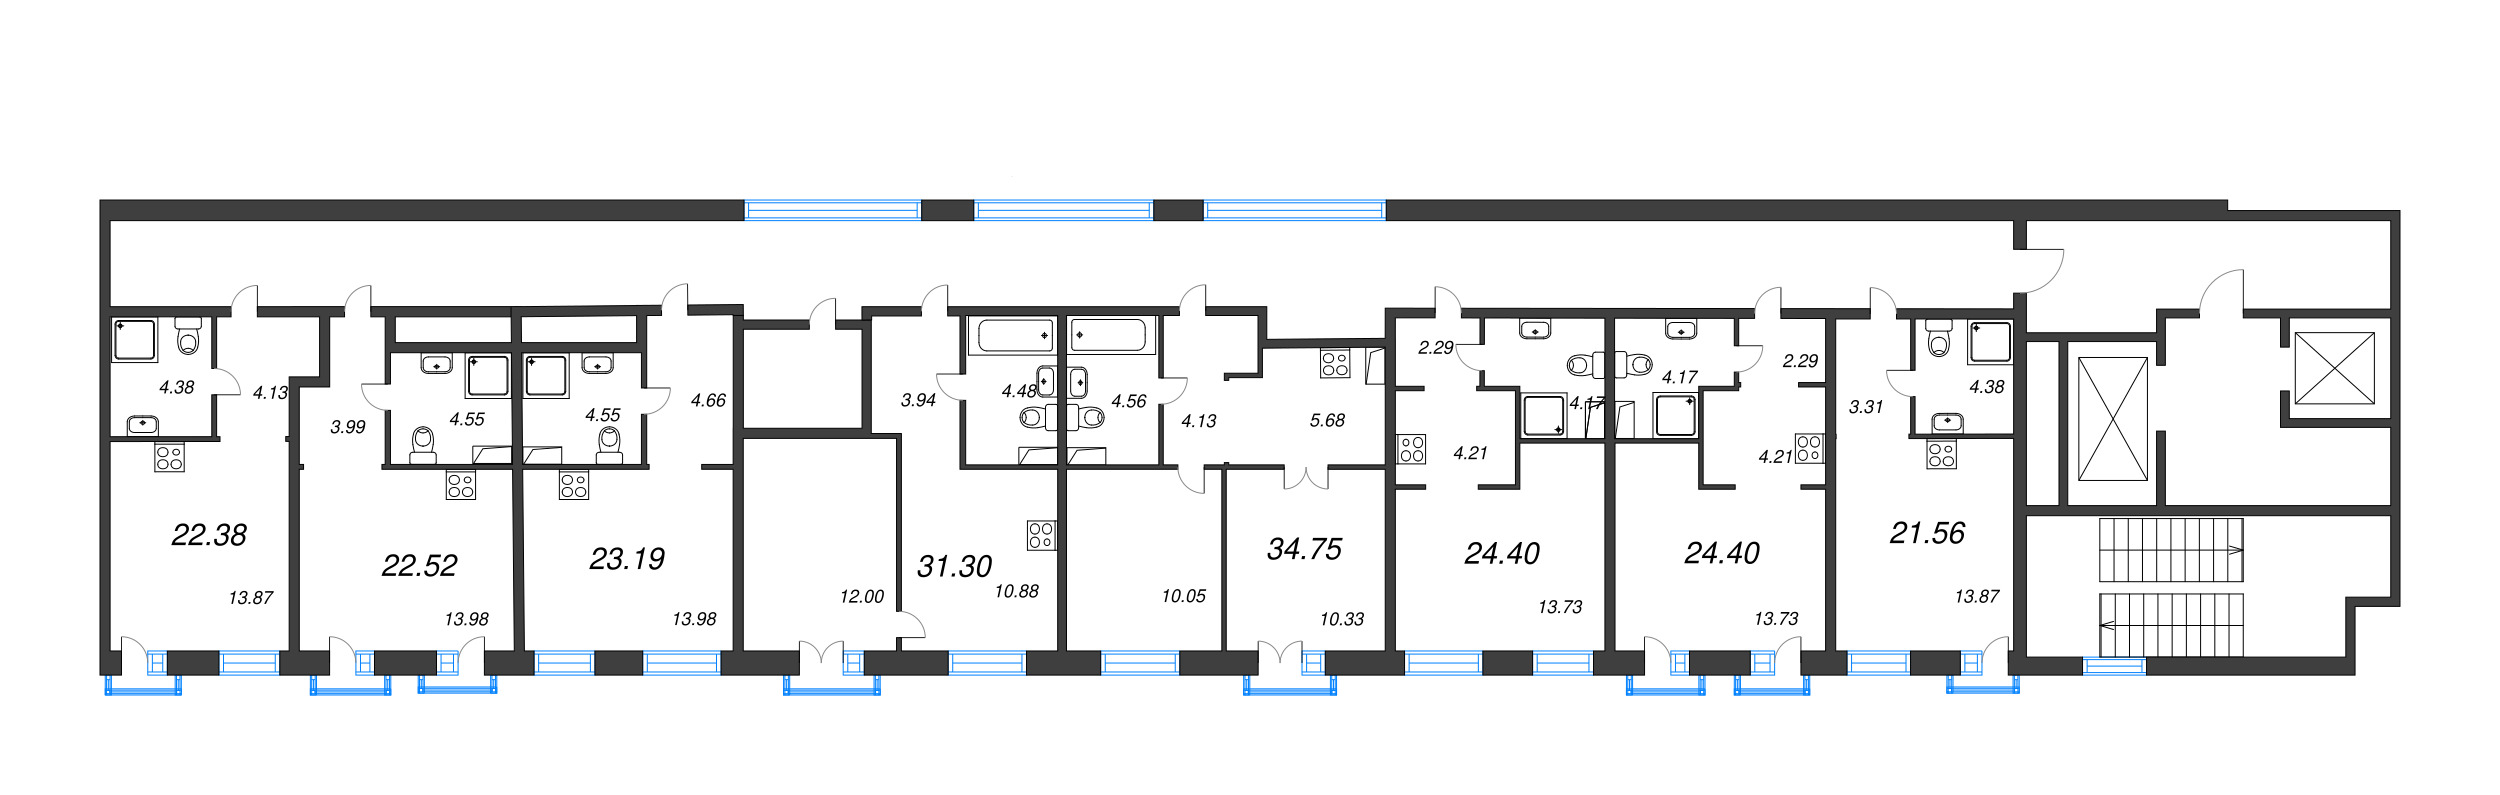 2-комнатная (Евро) квартира, 34.75 м² в ЖК "ID Polytech" - планировка этажа